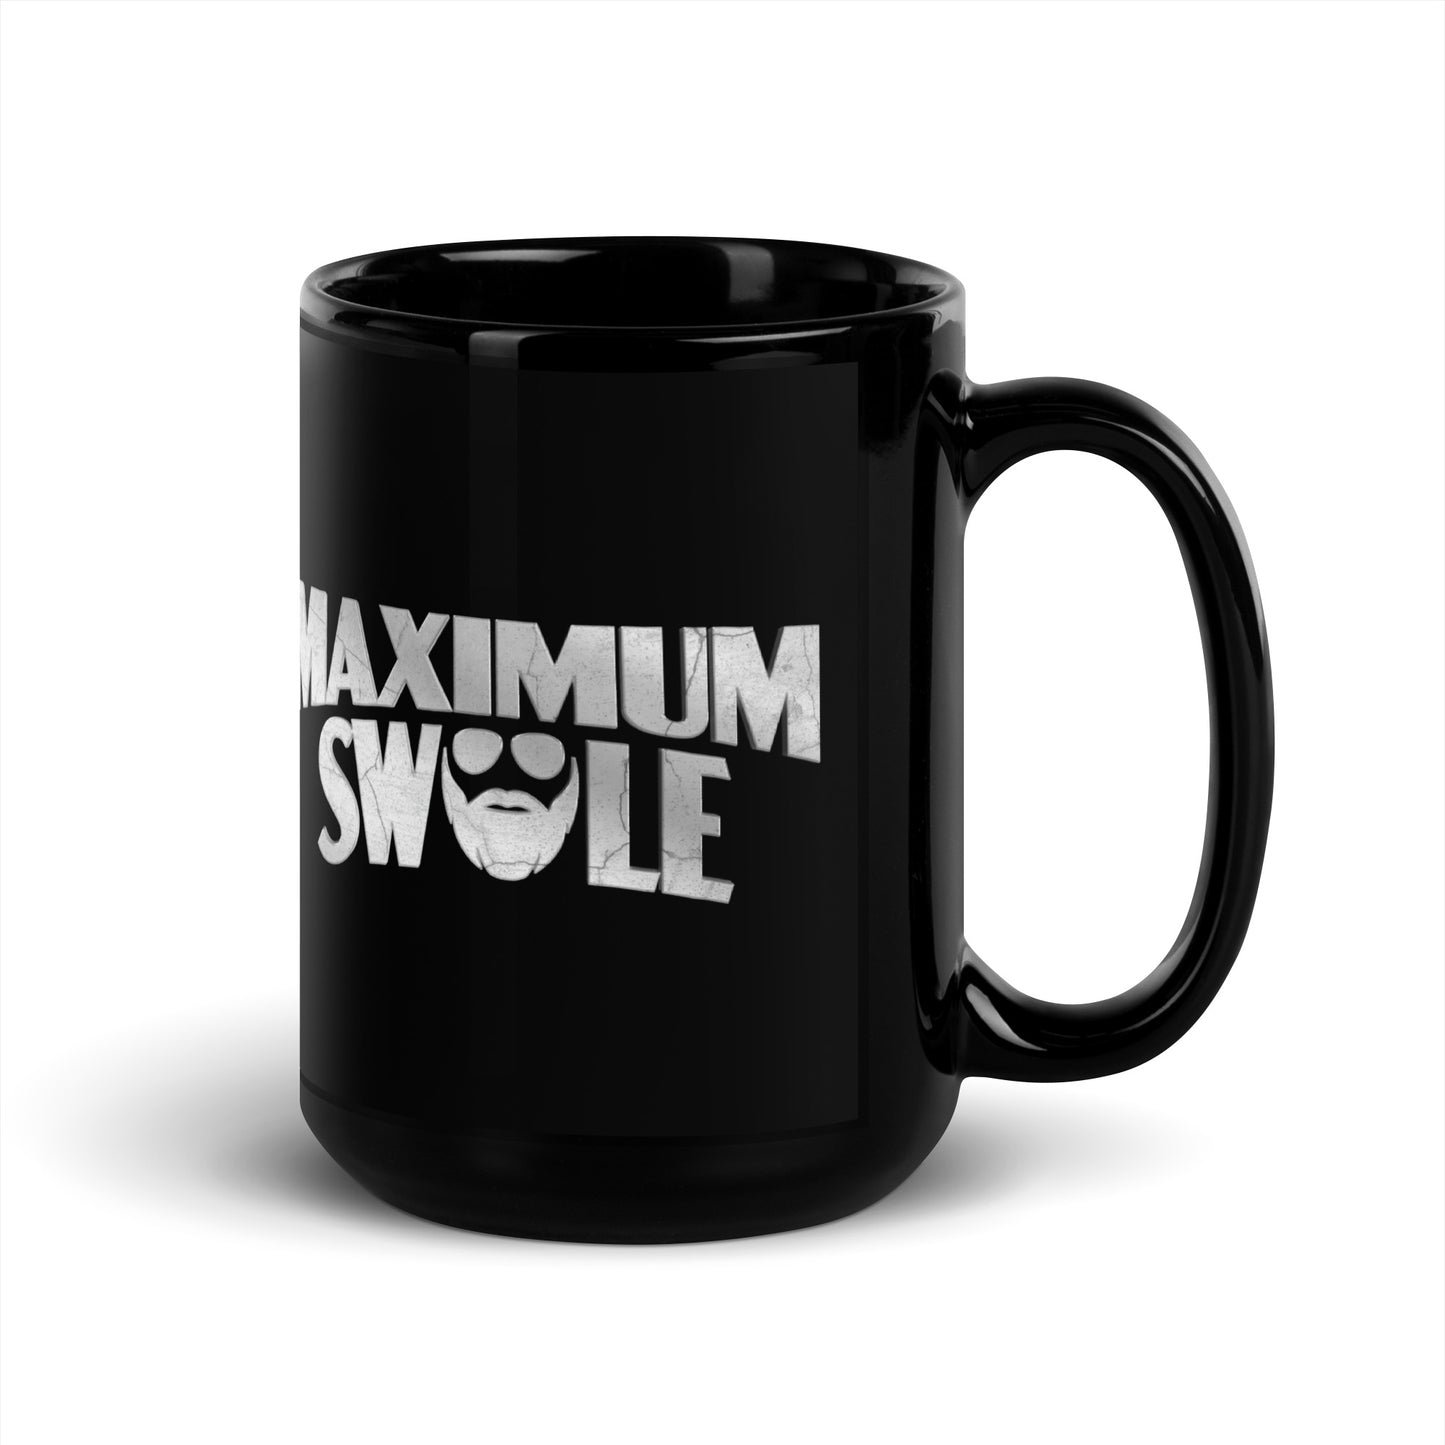 Maximum Swole Mug